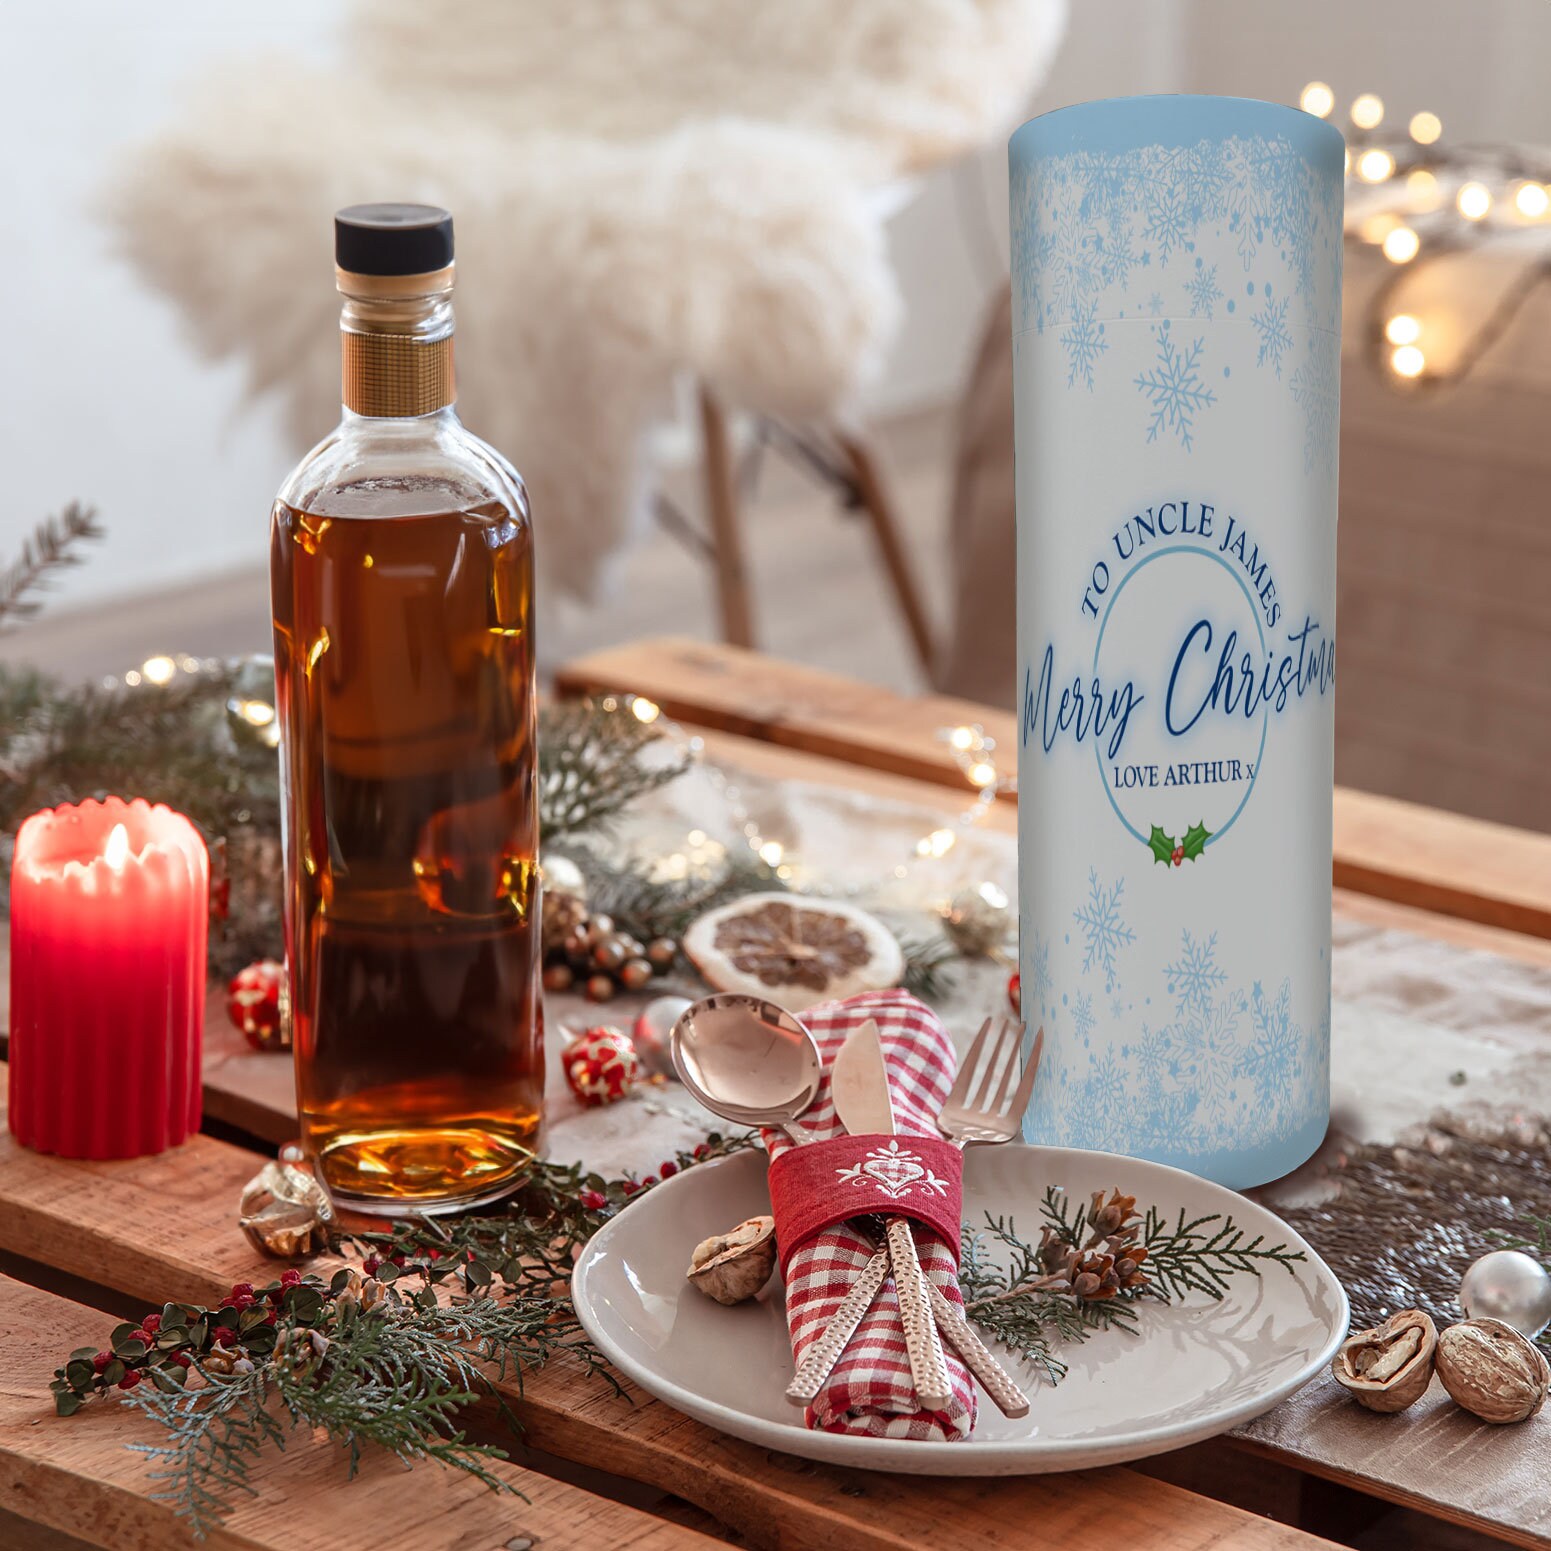 Coffret Champagne Bedel personnalisé Merry Christmas - Buy on